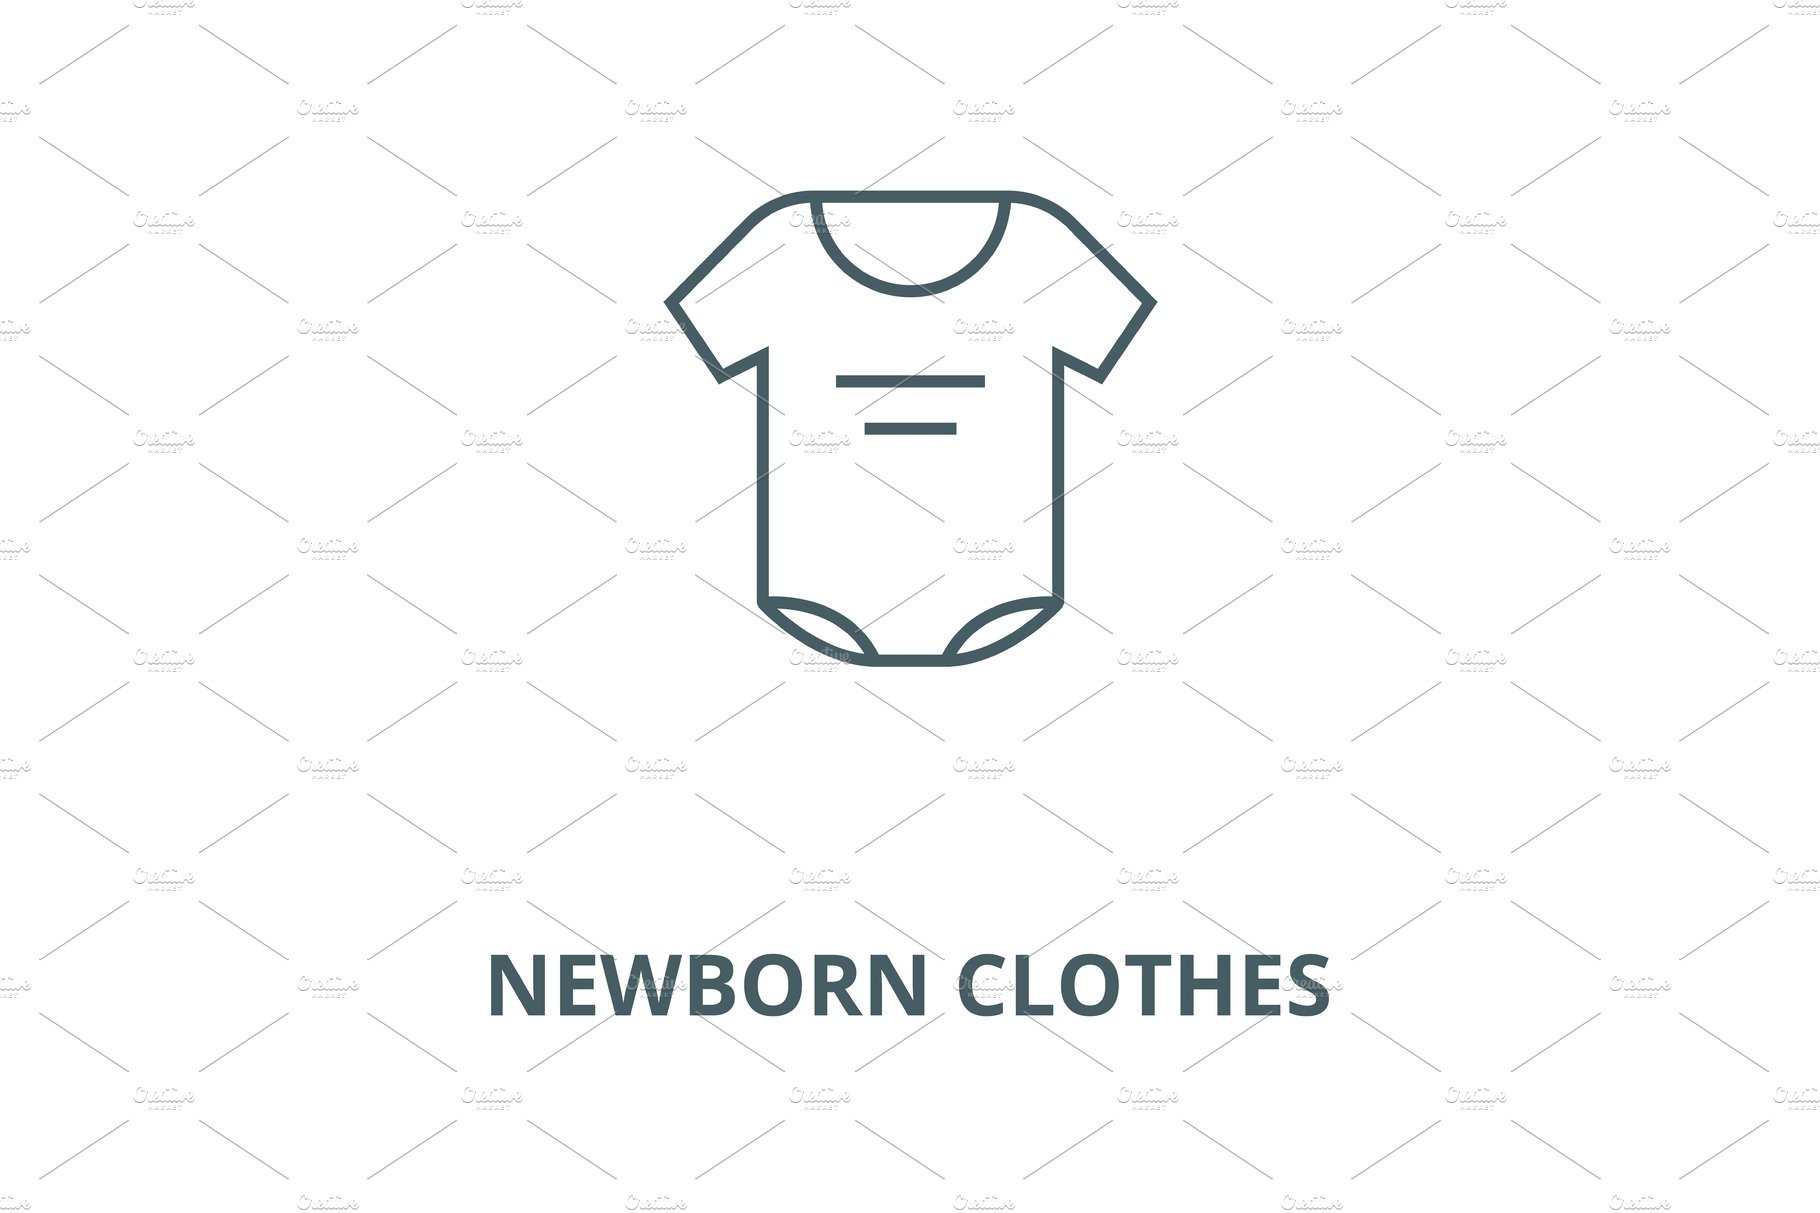 Newborn clothes vector line icon cover image.